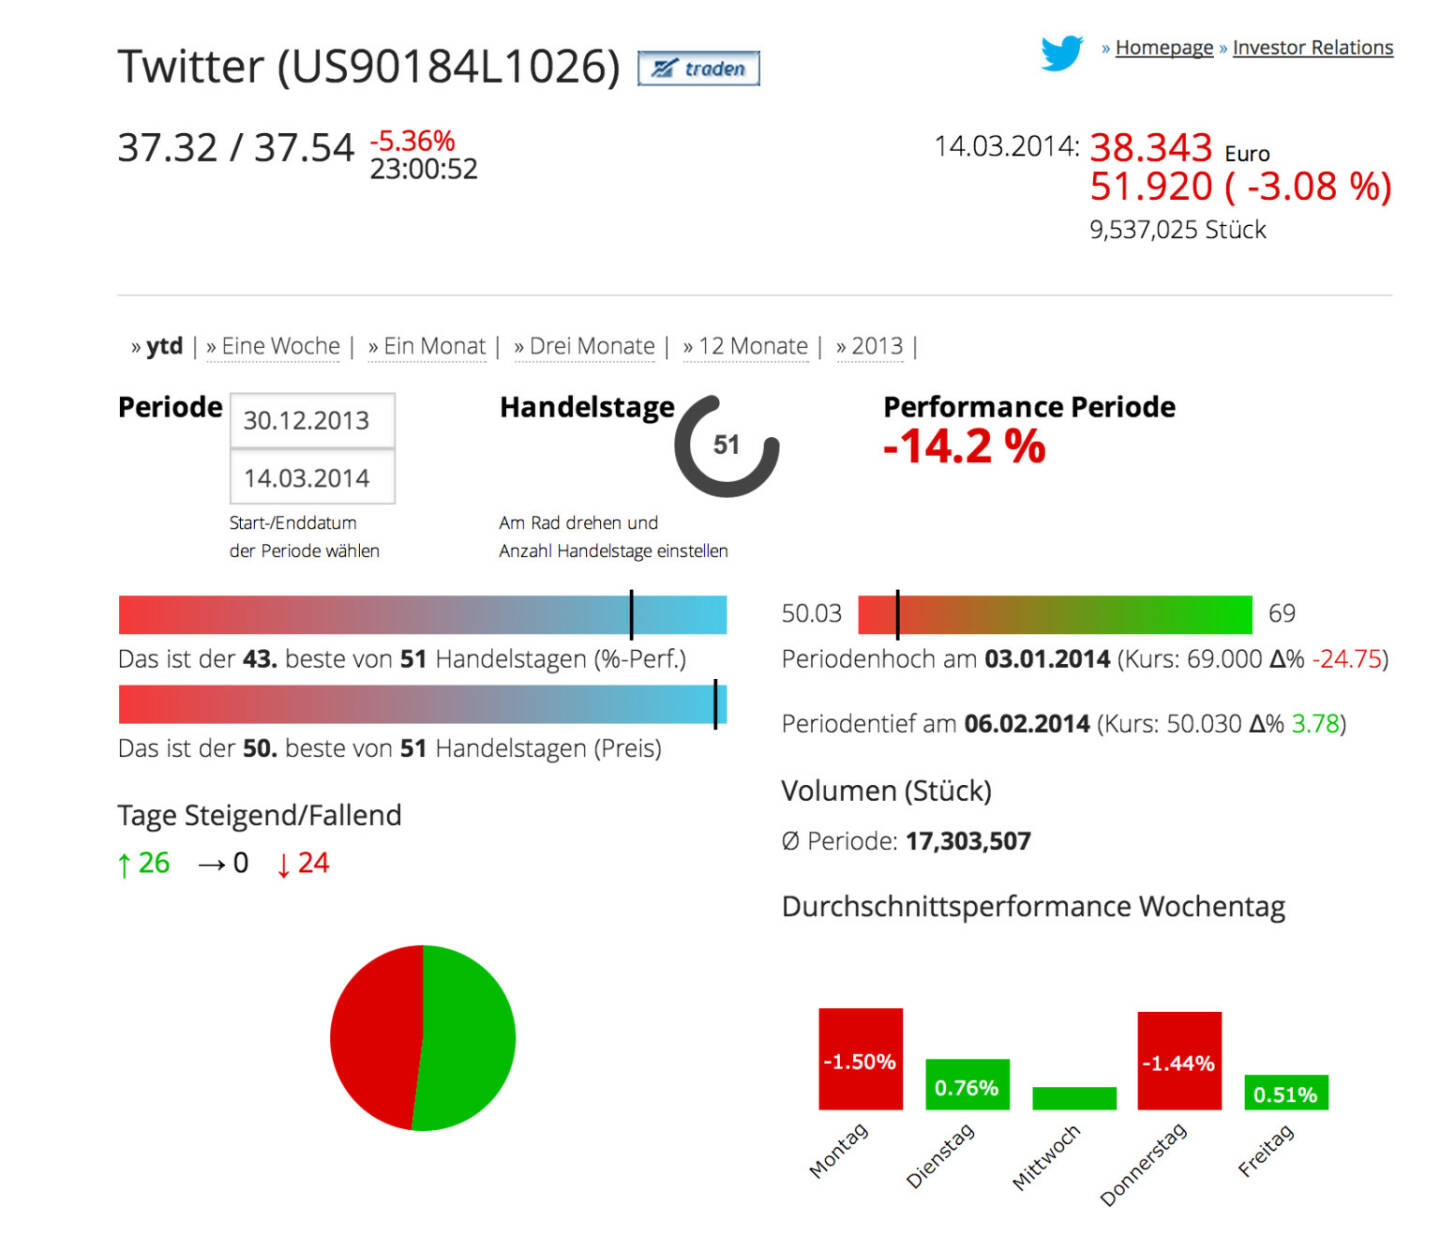 Twitter im Börse Social Network, http://boerse-social.com/launch/aktie/twitter